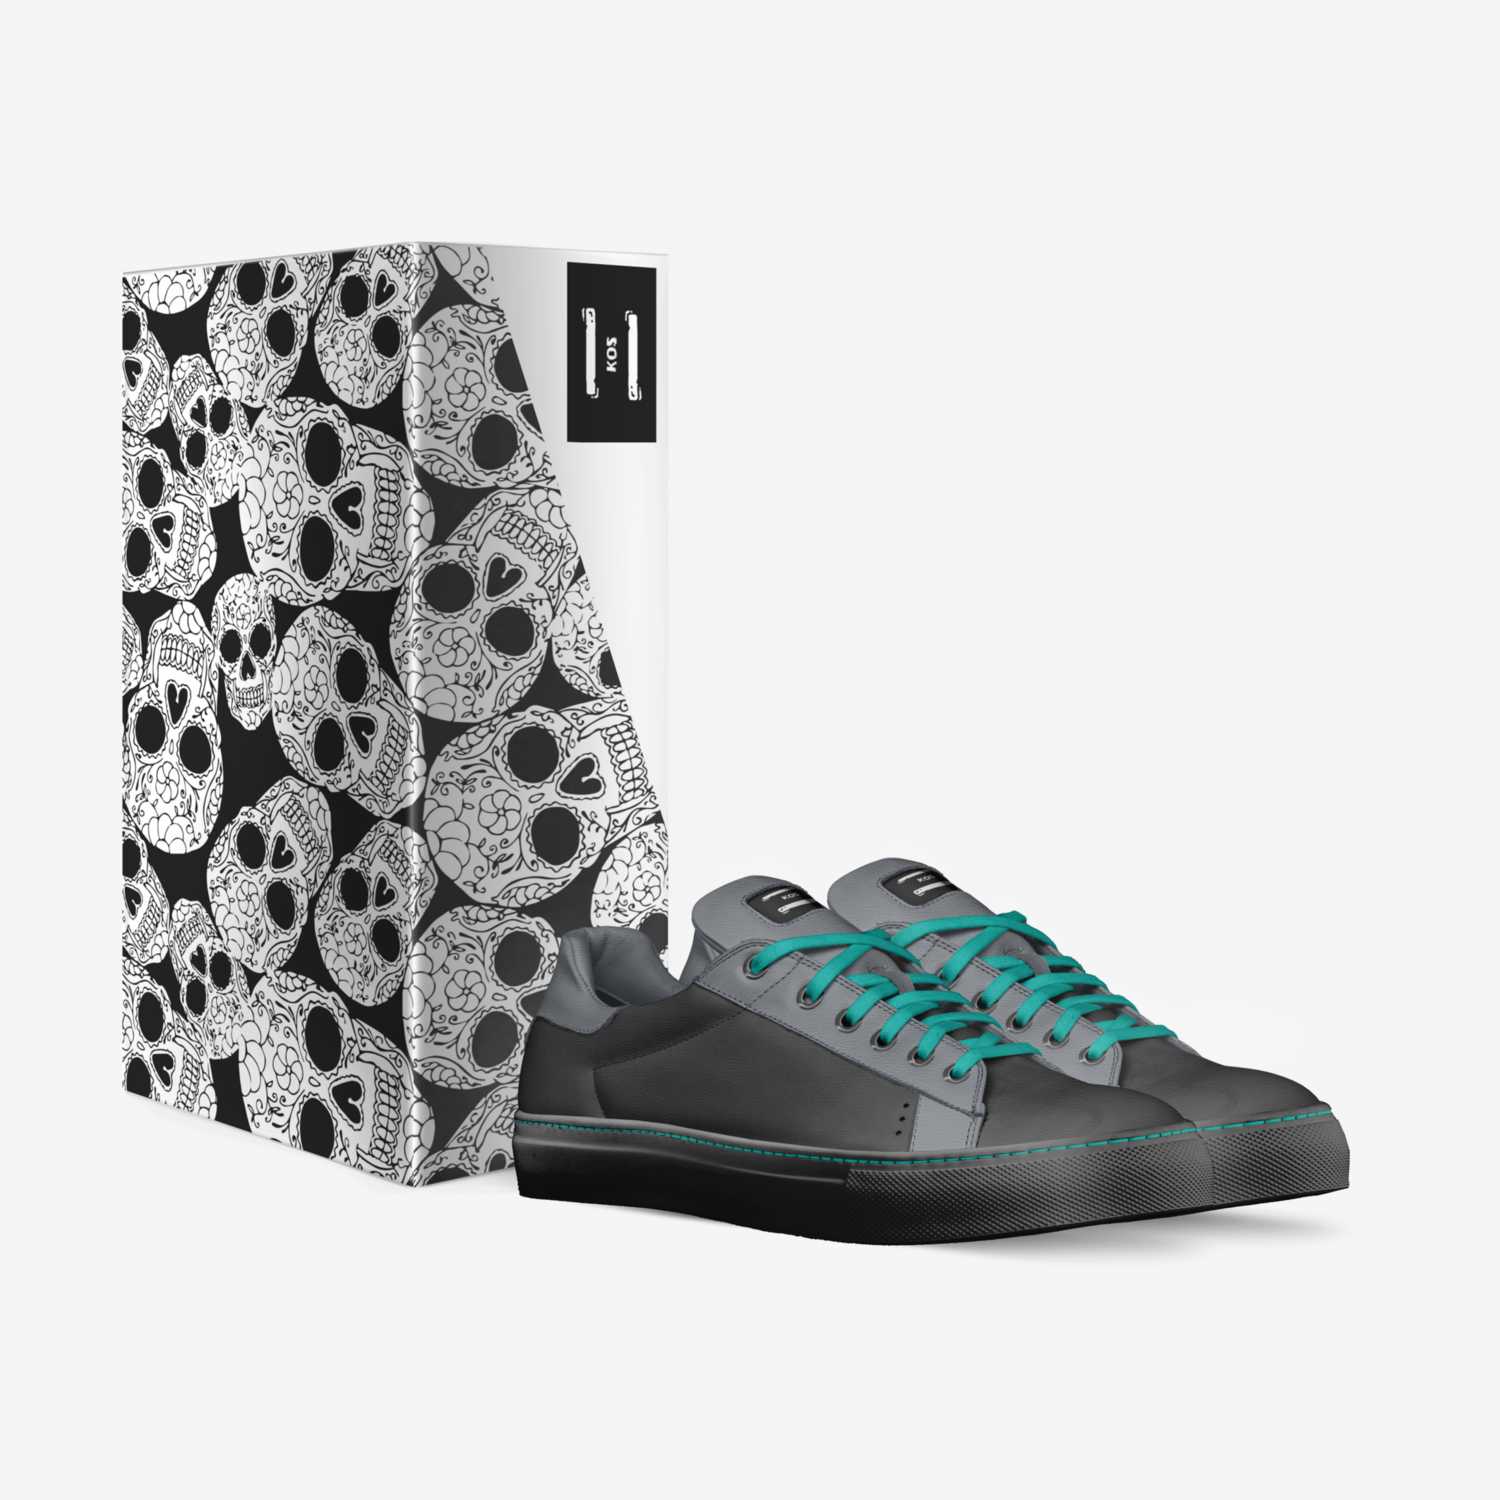 KOS custom made in Italy shoes by Jenna Gapinski | Box view